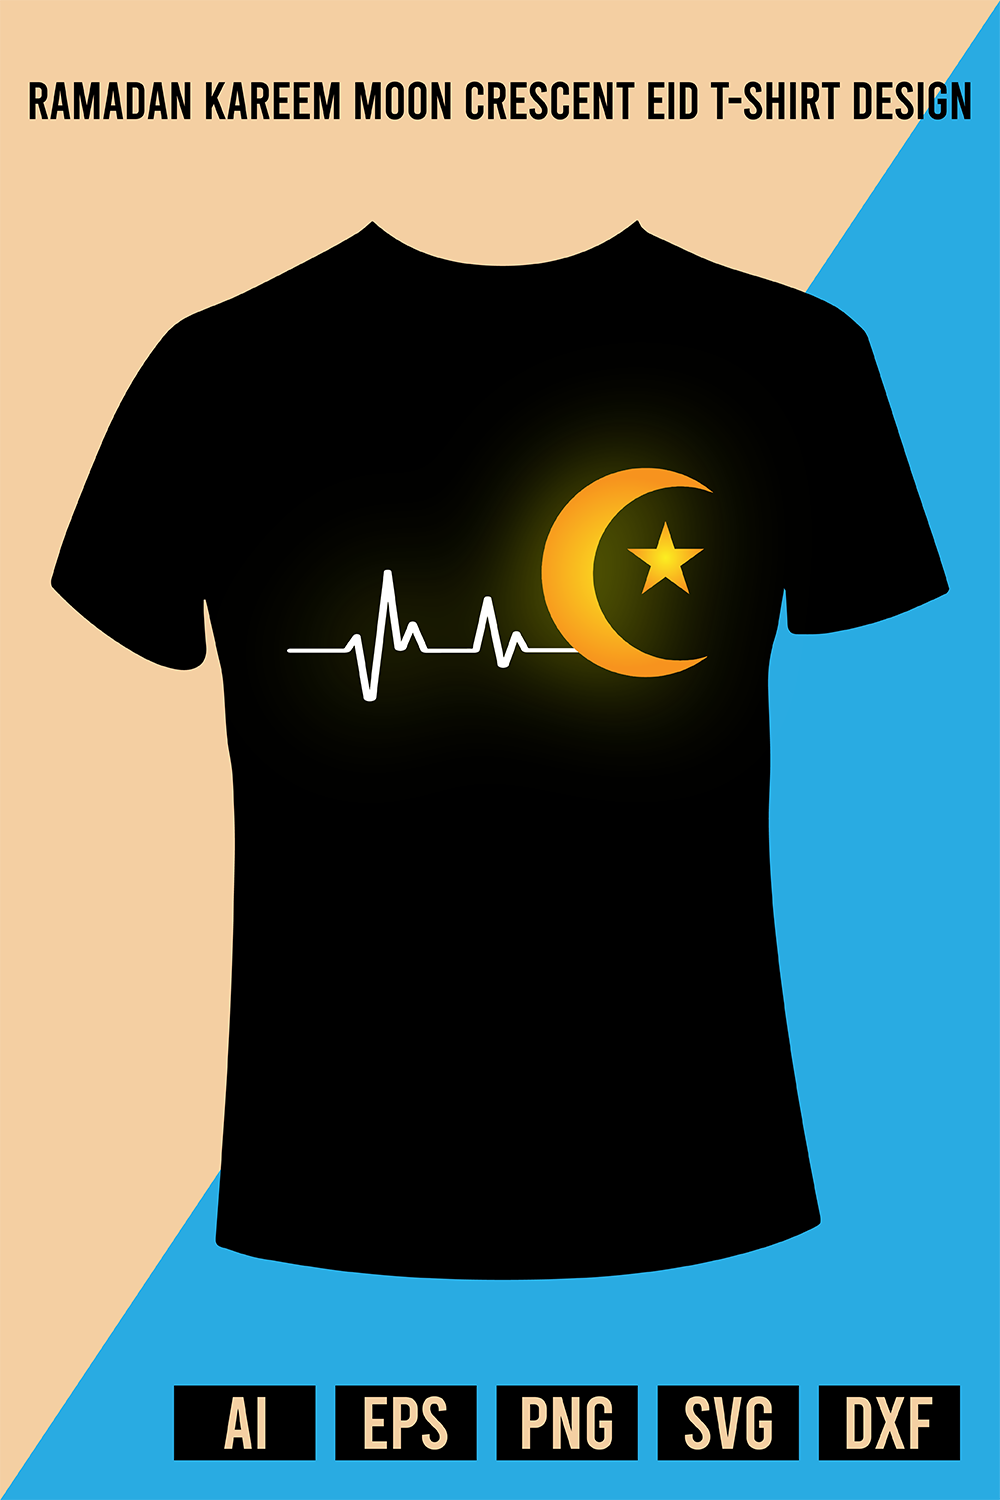 Ramadan Kareem Moon Crescent Eid T-shirt Design pinterest preview image.